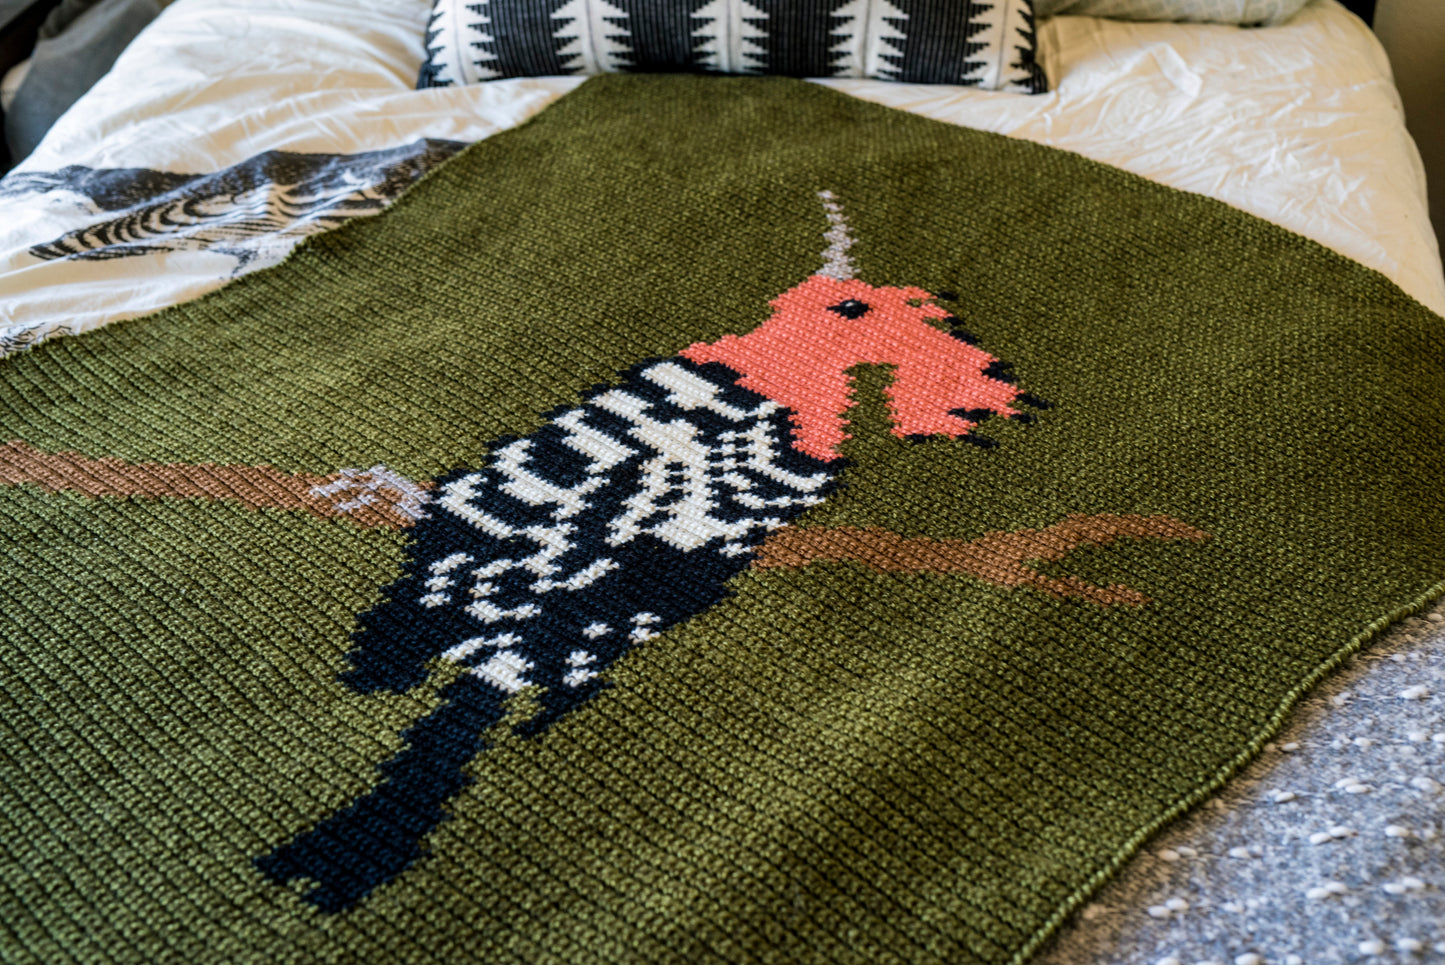 Crochet Pattern: The Hoopoe Throw